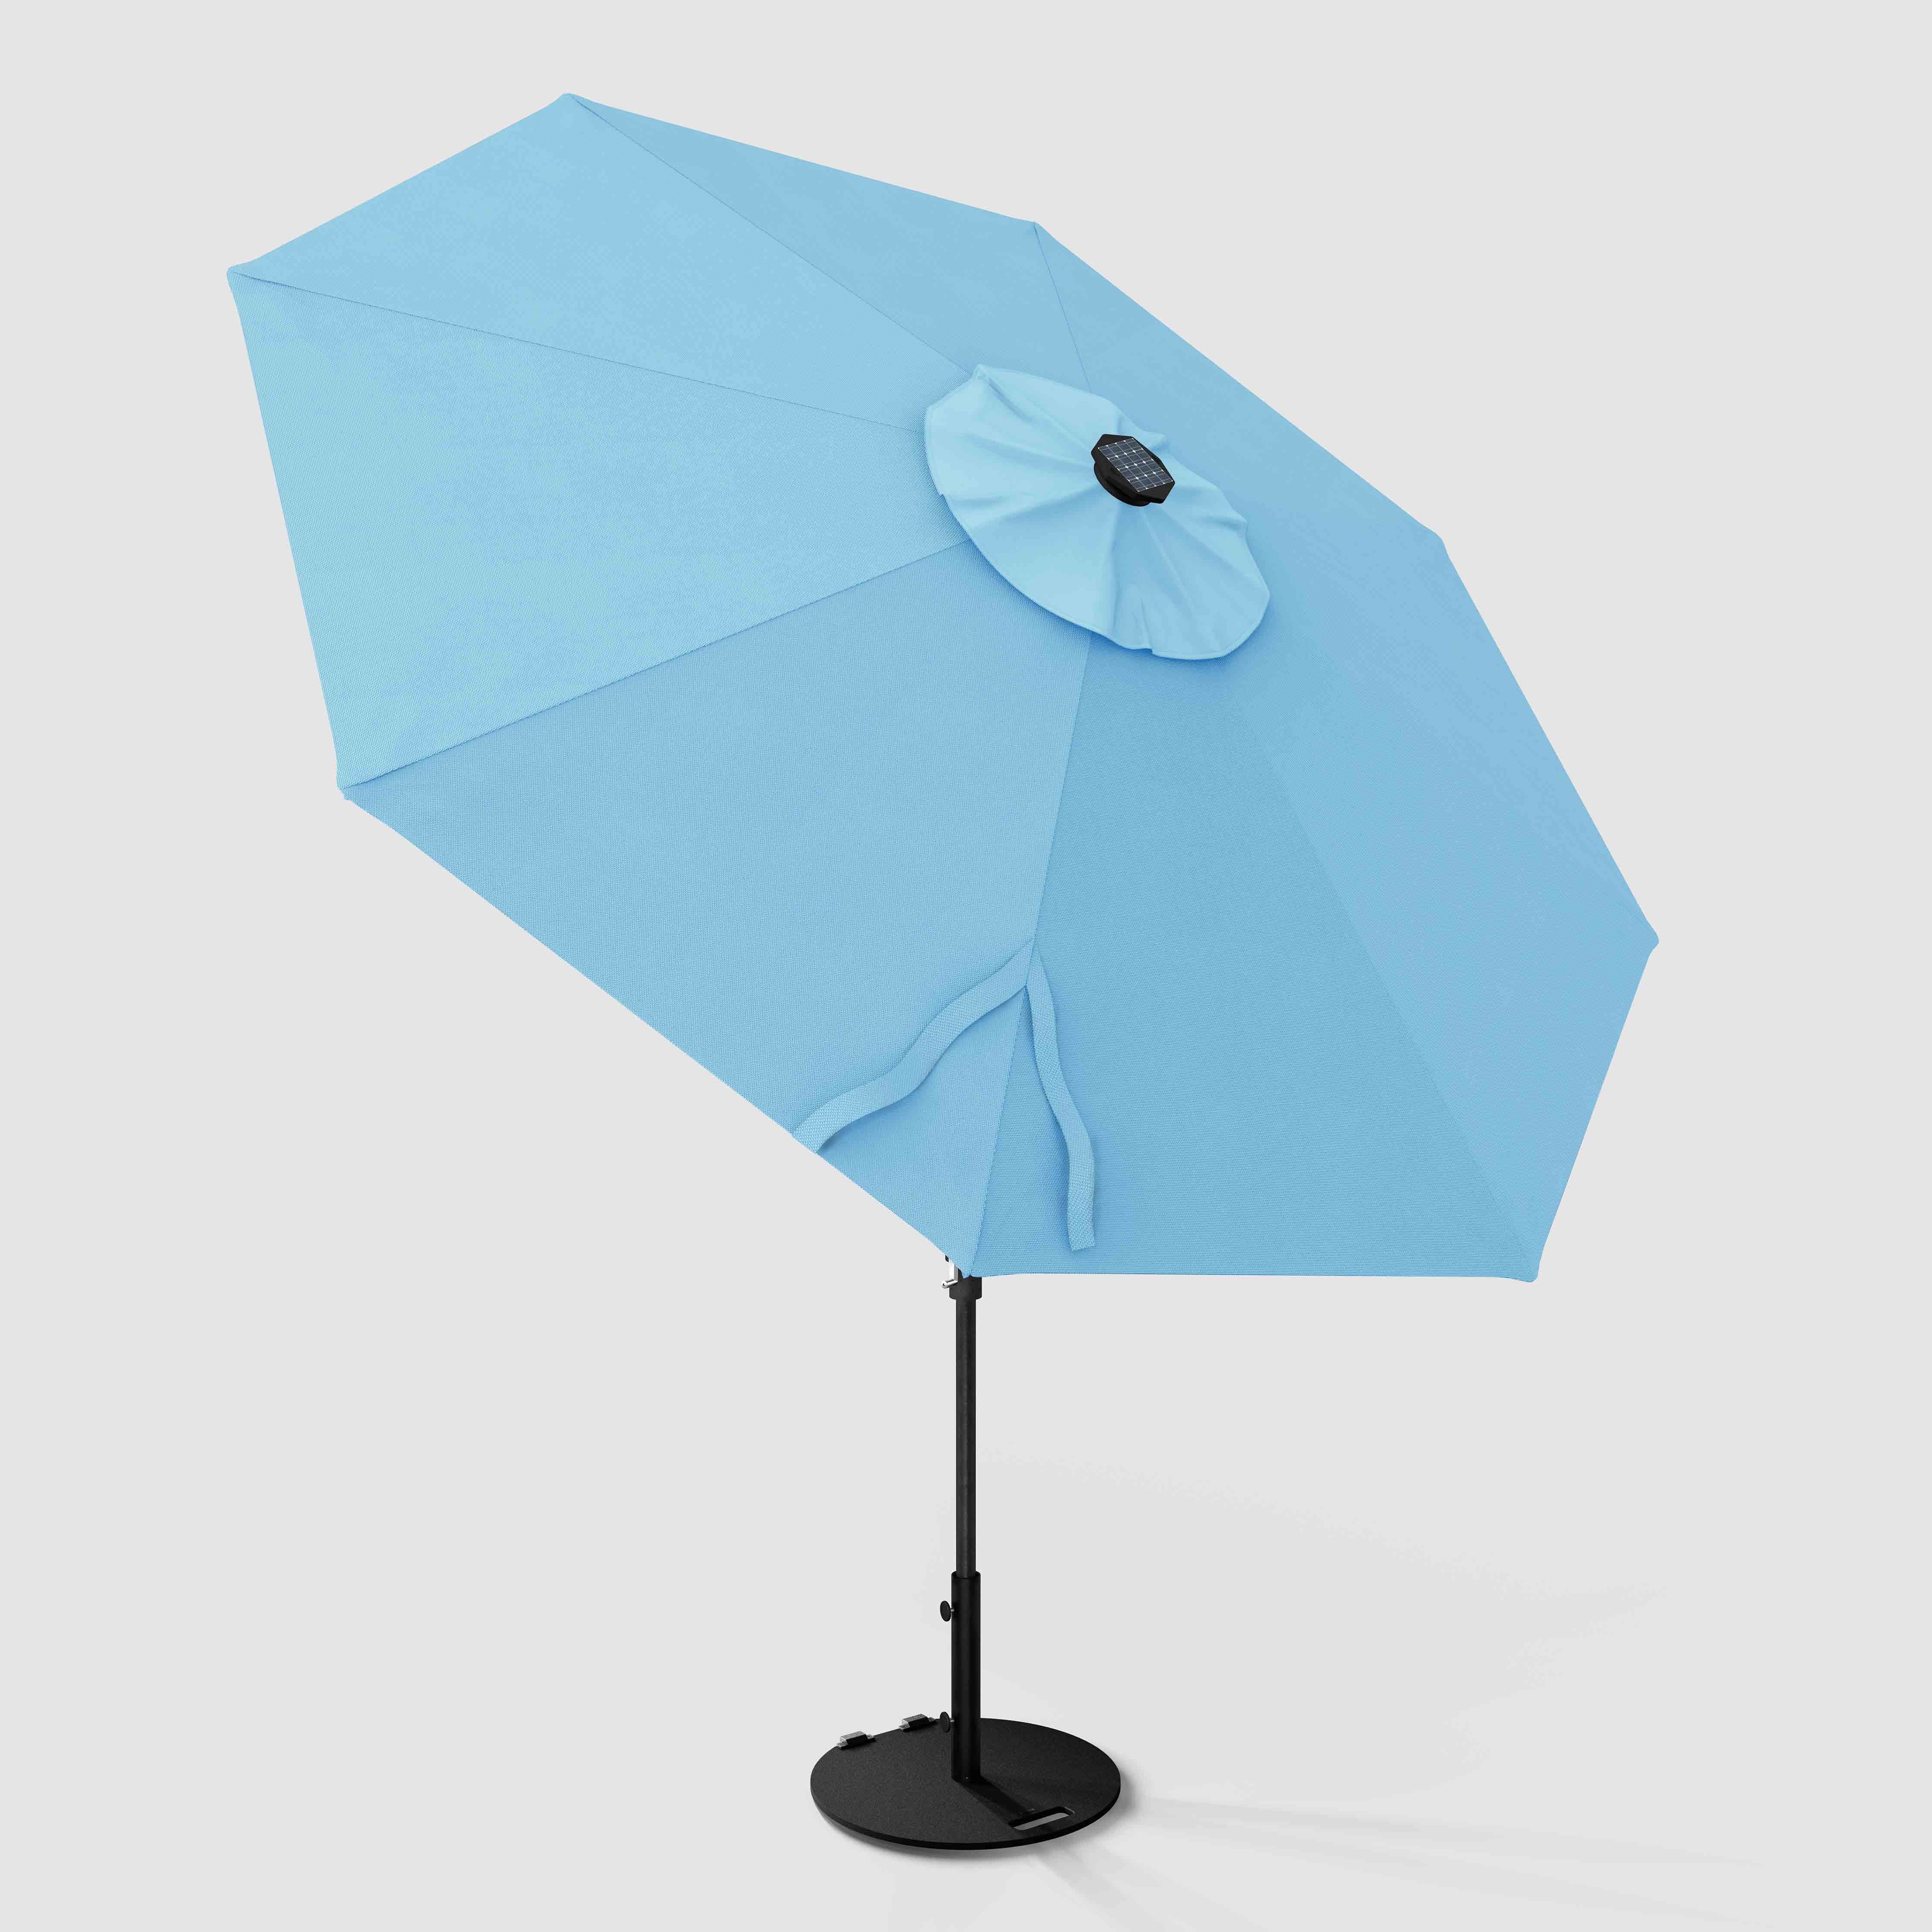 The LED Swilt™ - Sunbrella Capri